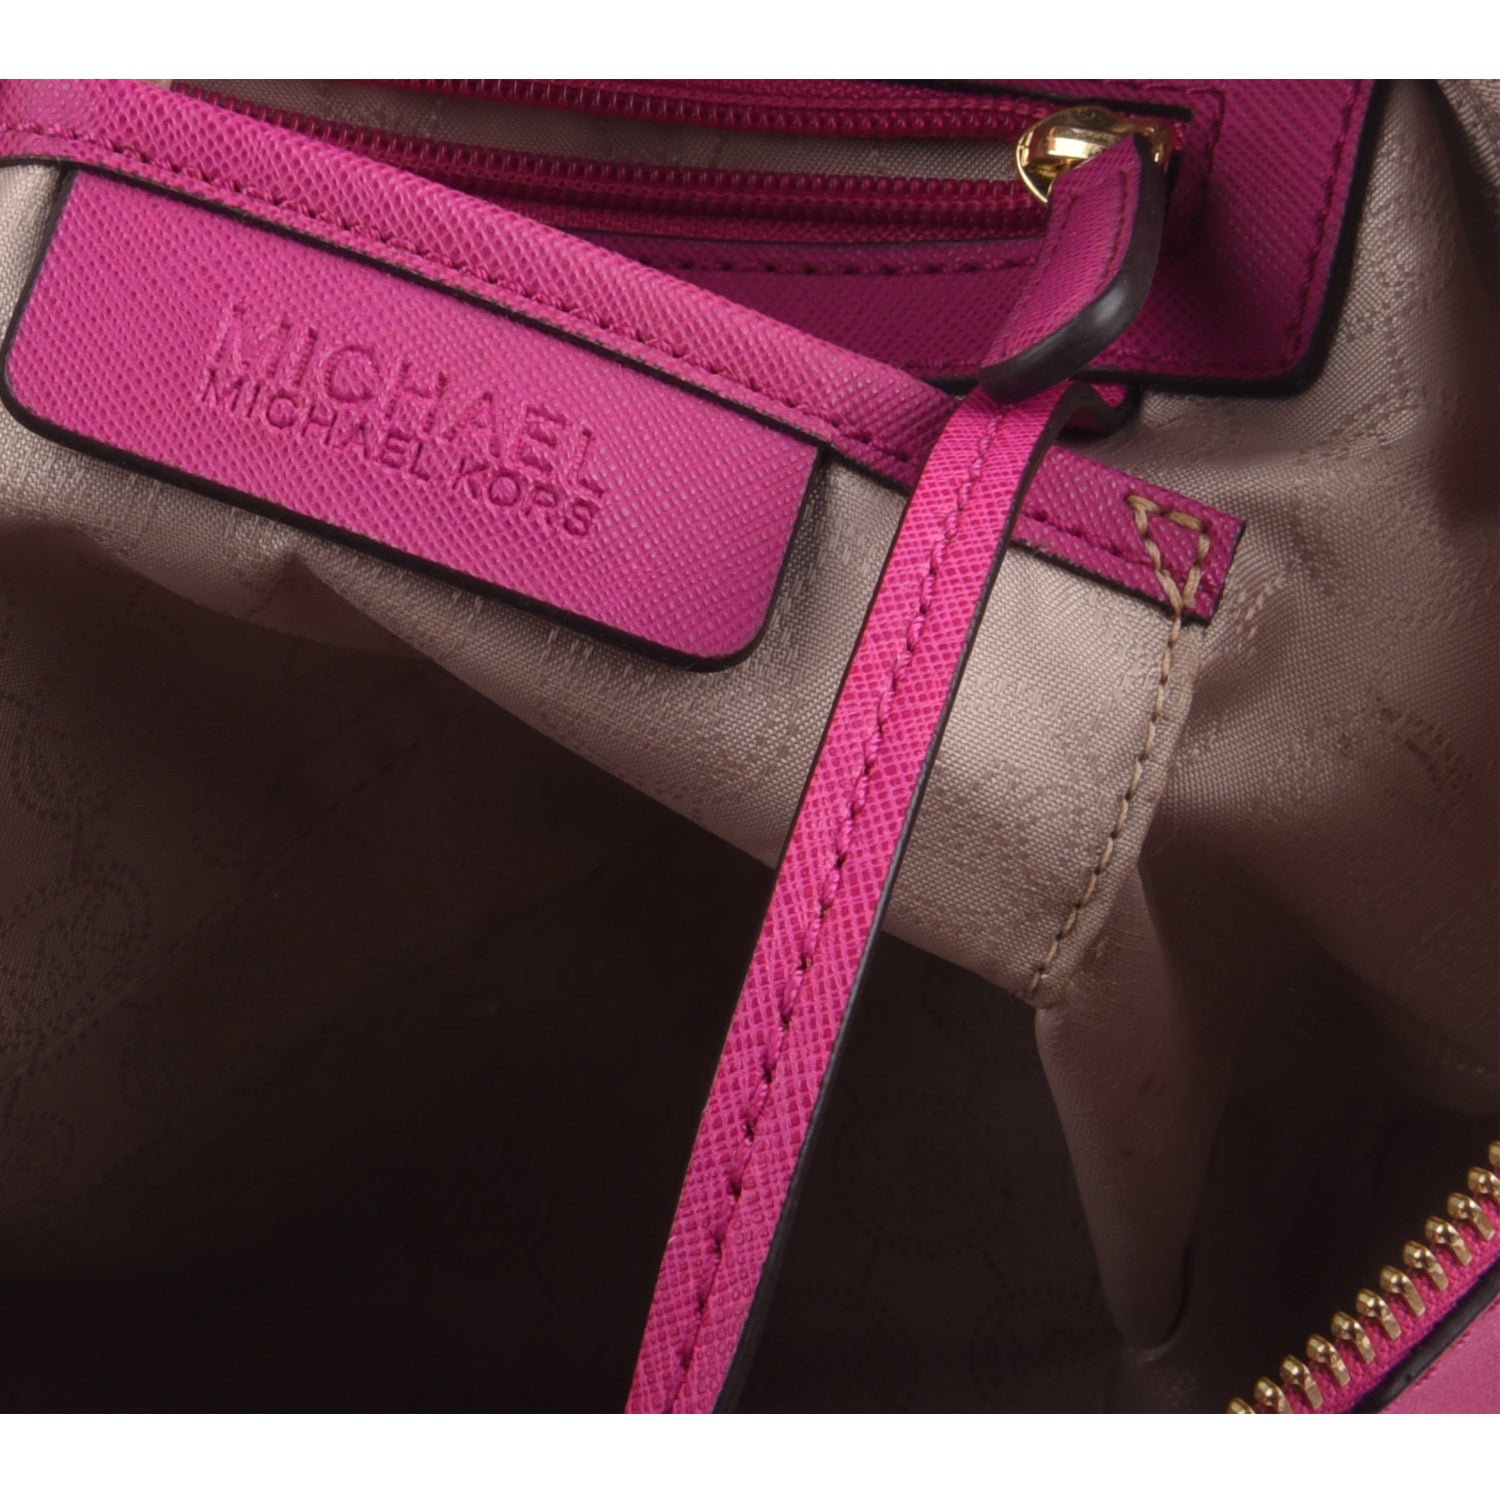 Michael Kors Jet Set Pink Tote Bag